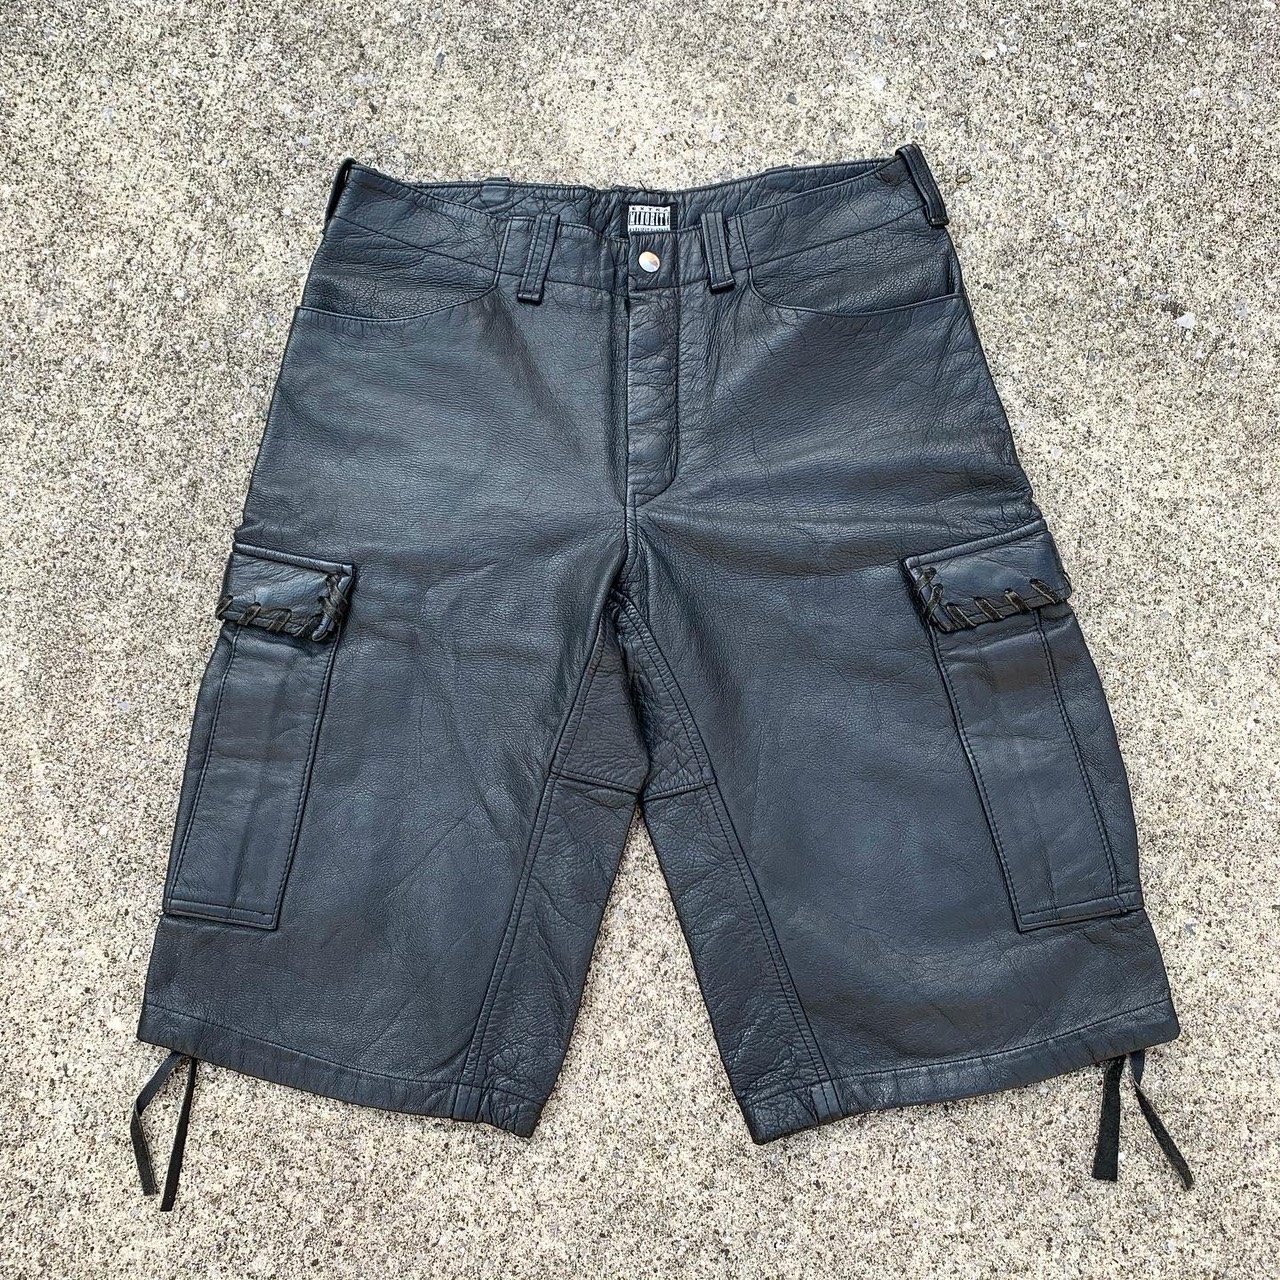 90s Minority Leather Shorts